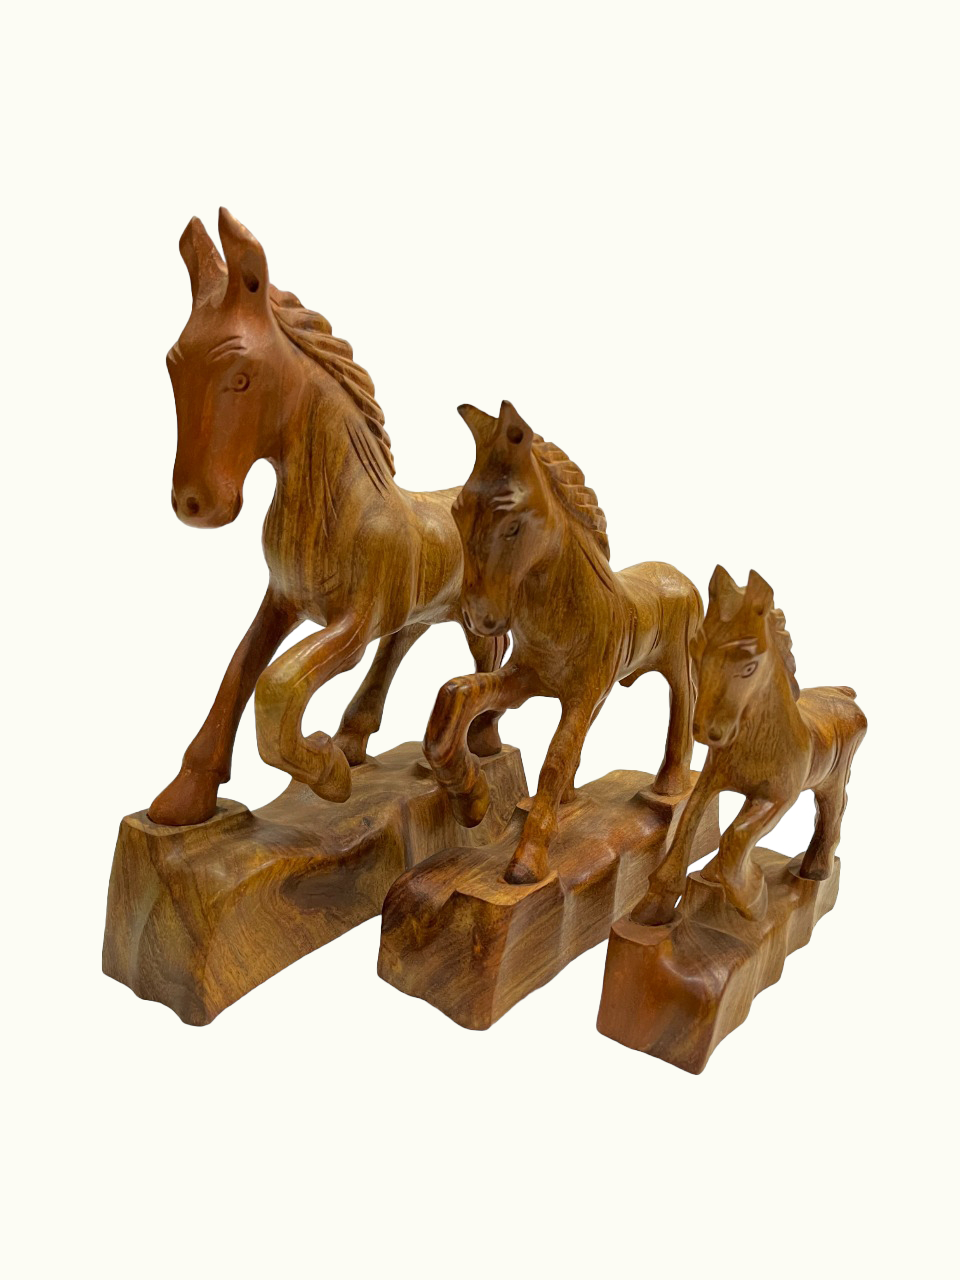 Beautiful Wooden Horses, The Best Running Horses Sculptures.